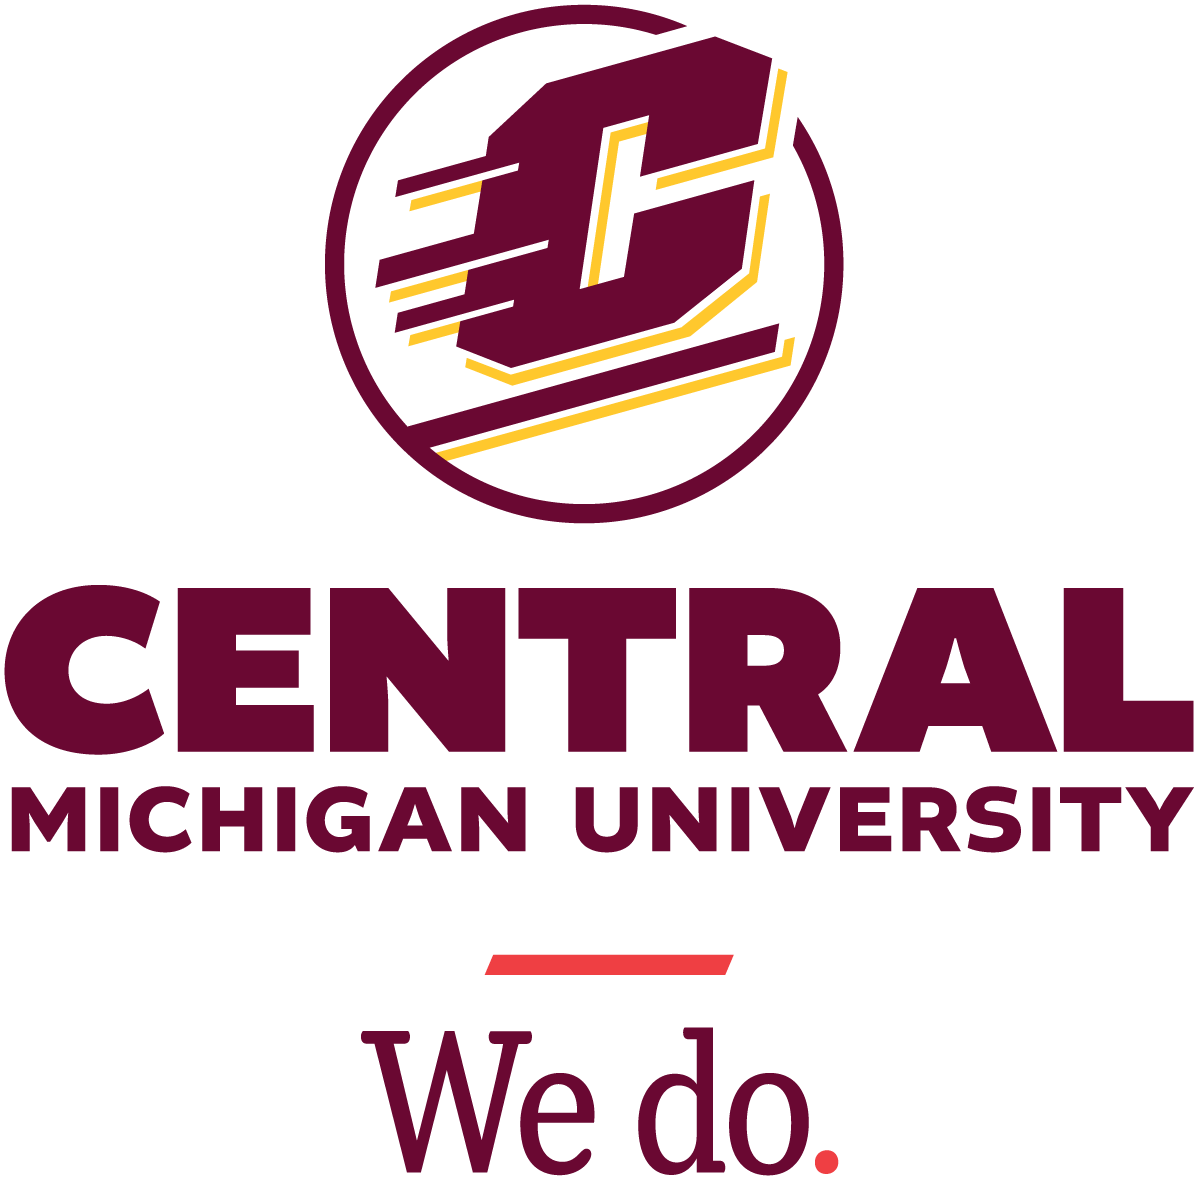 Central Michigan University. We do.